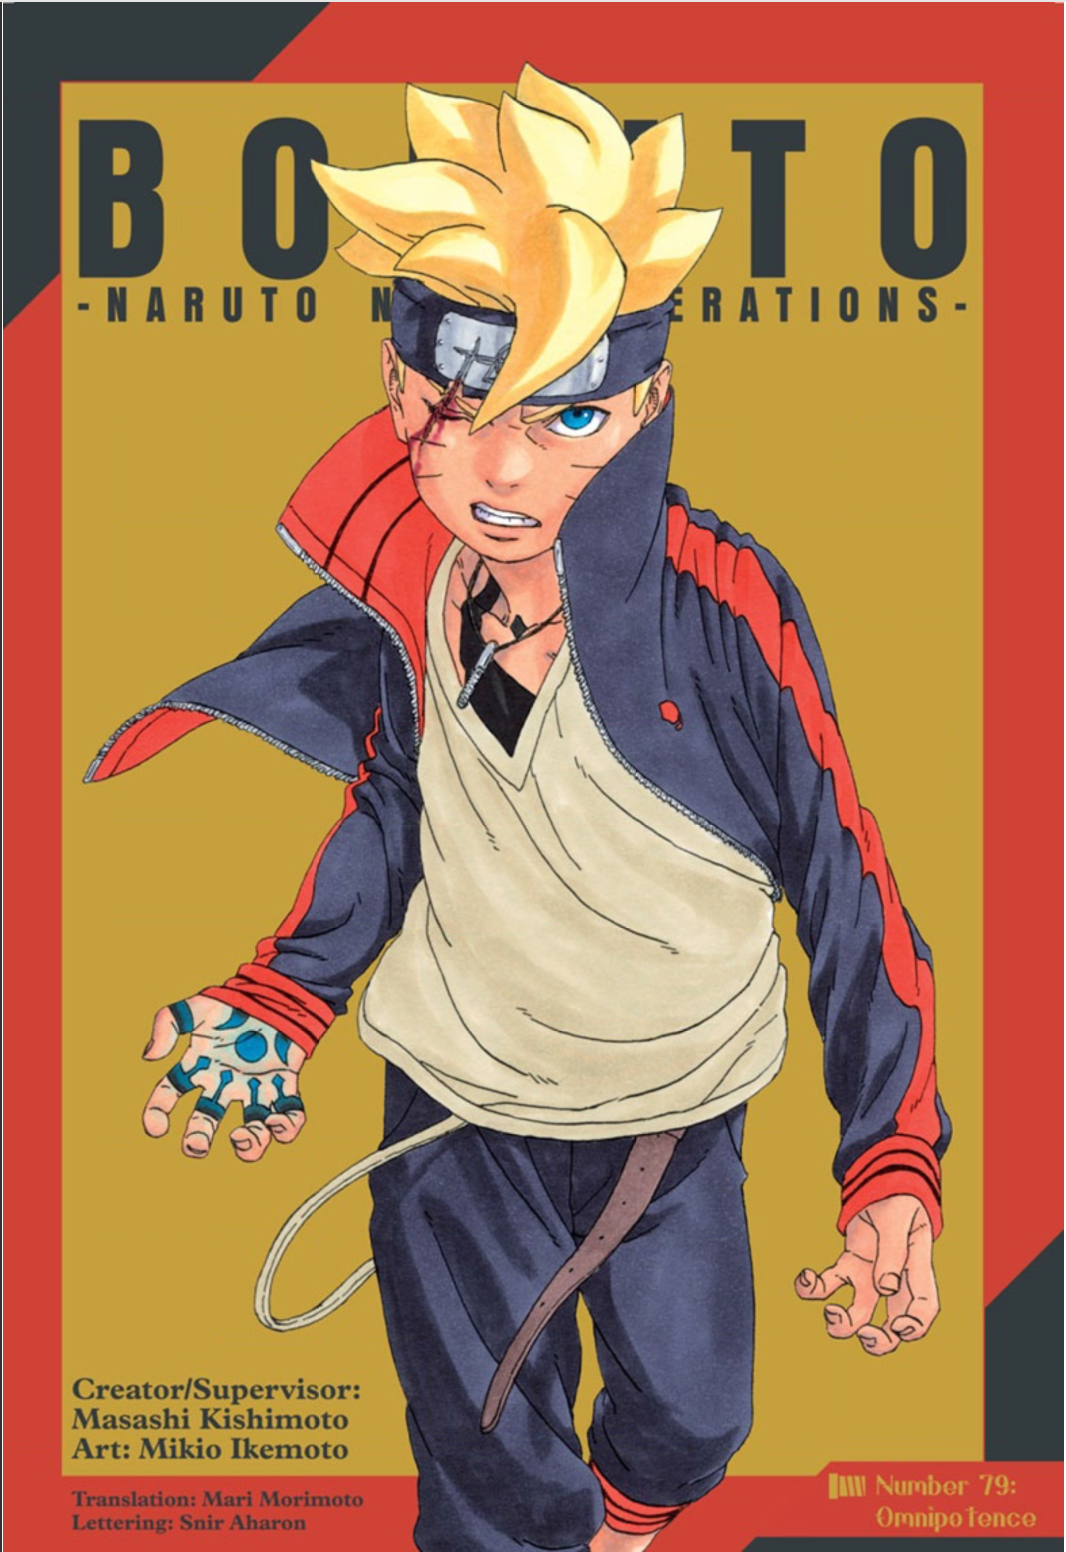 Boruto: Naruto Next Generations Part 1 Review